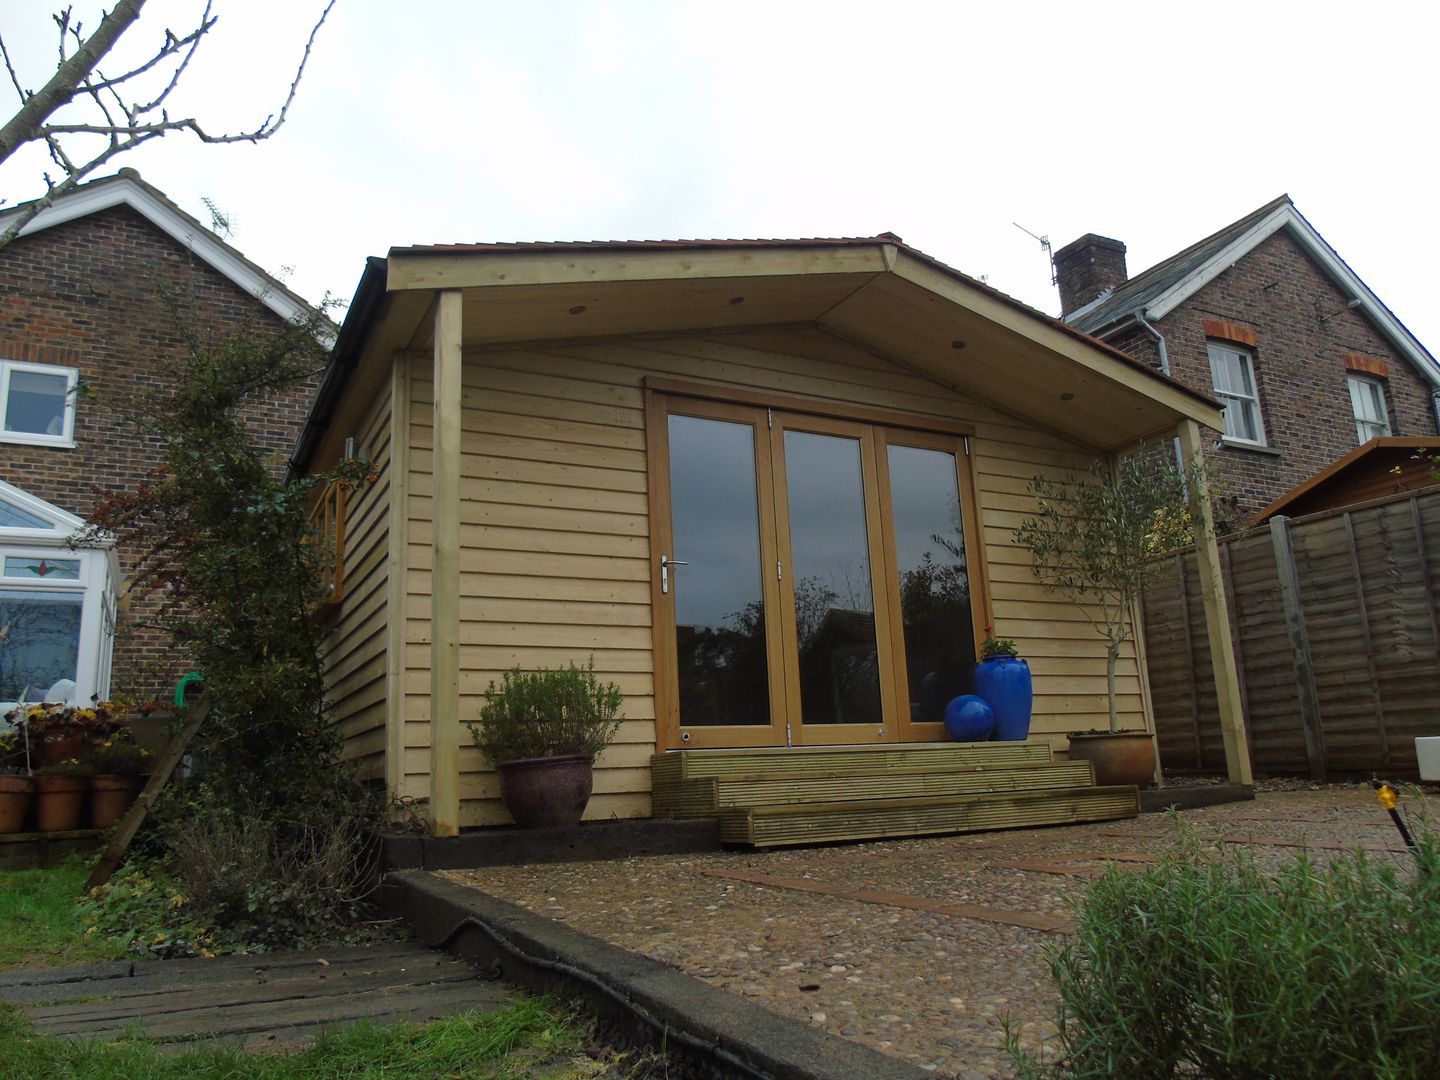 Pitched Roof Garden Office with Storage Miniature Manors Ltd Oficinas garden room,summerhouse,garden office,workshop